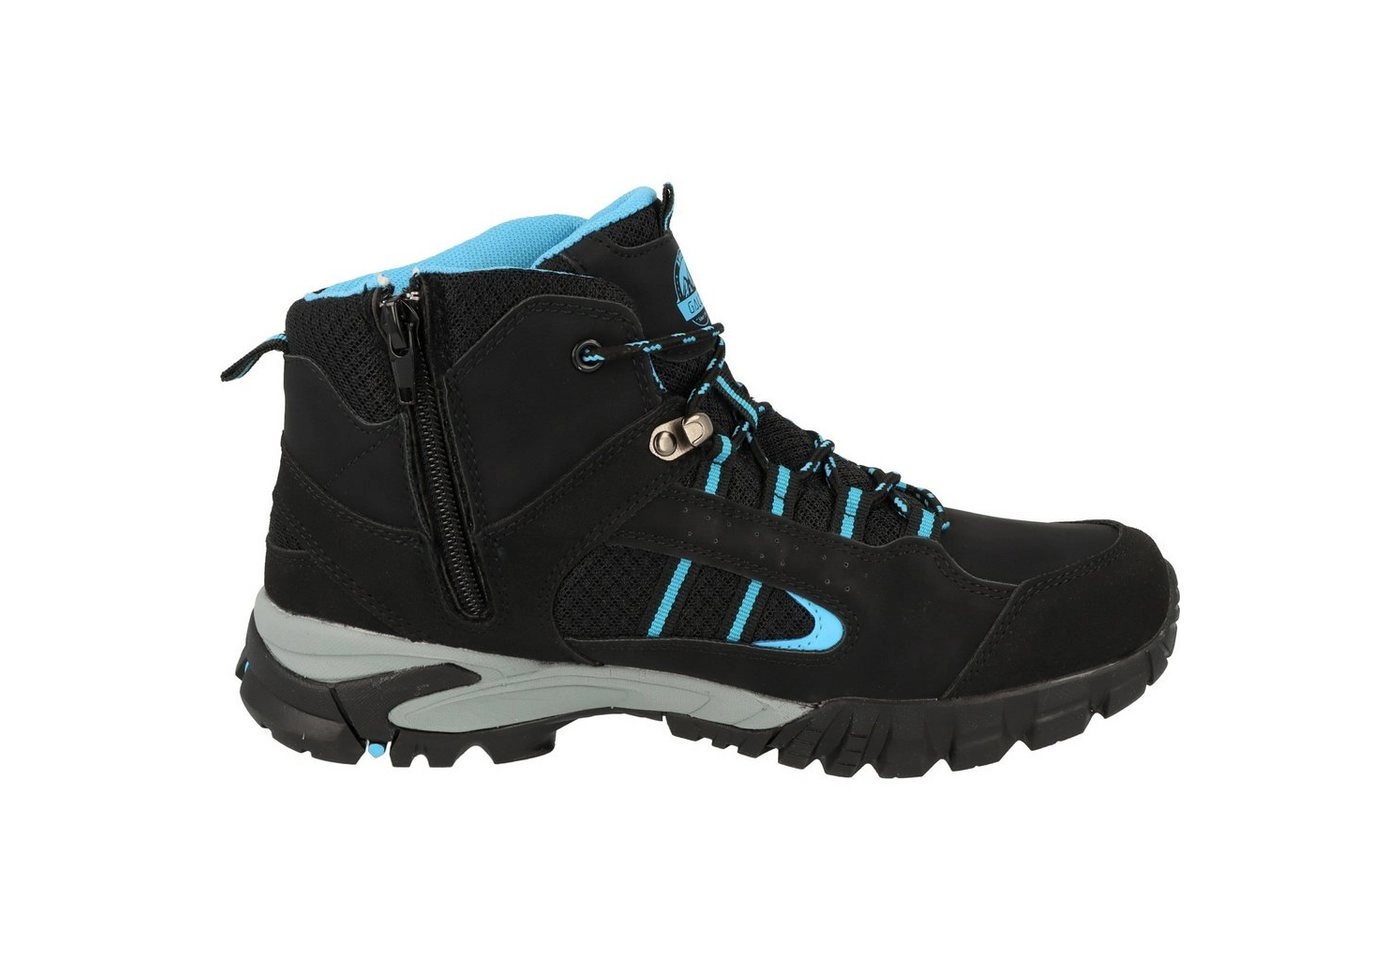 Galop »Damen Schuhe Trekking Boots Stiefel Schnürer L34501.802 Schwarz« Trekkingschuh